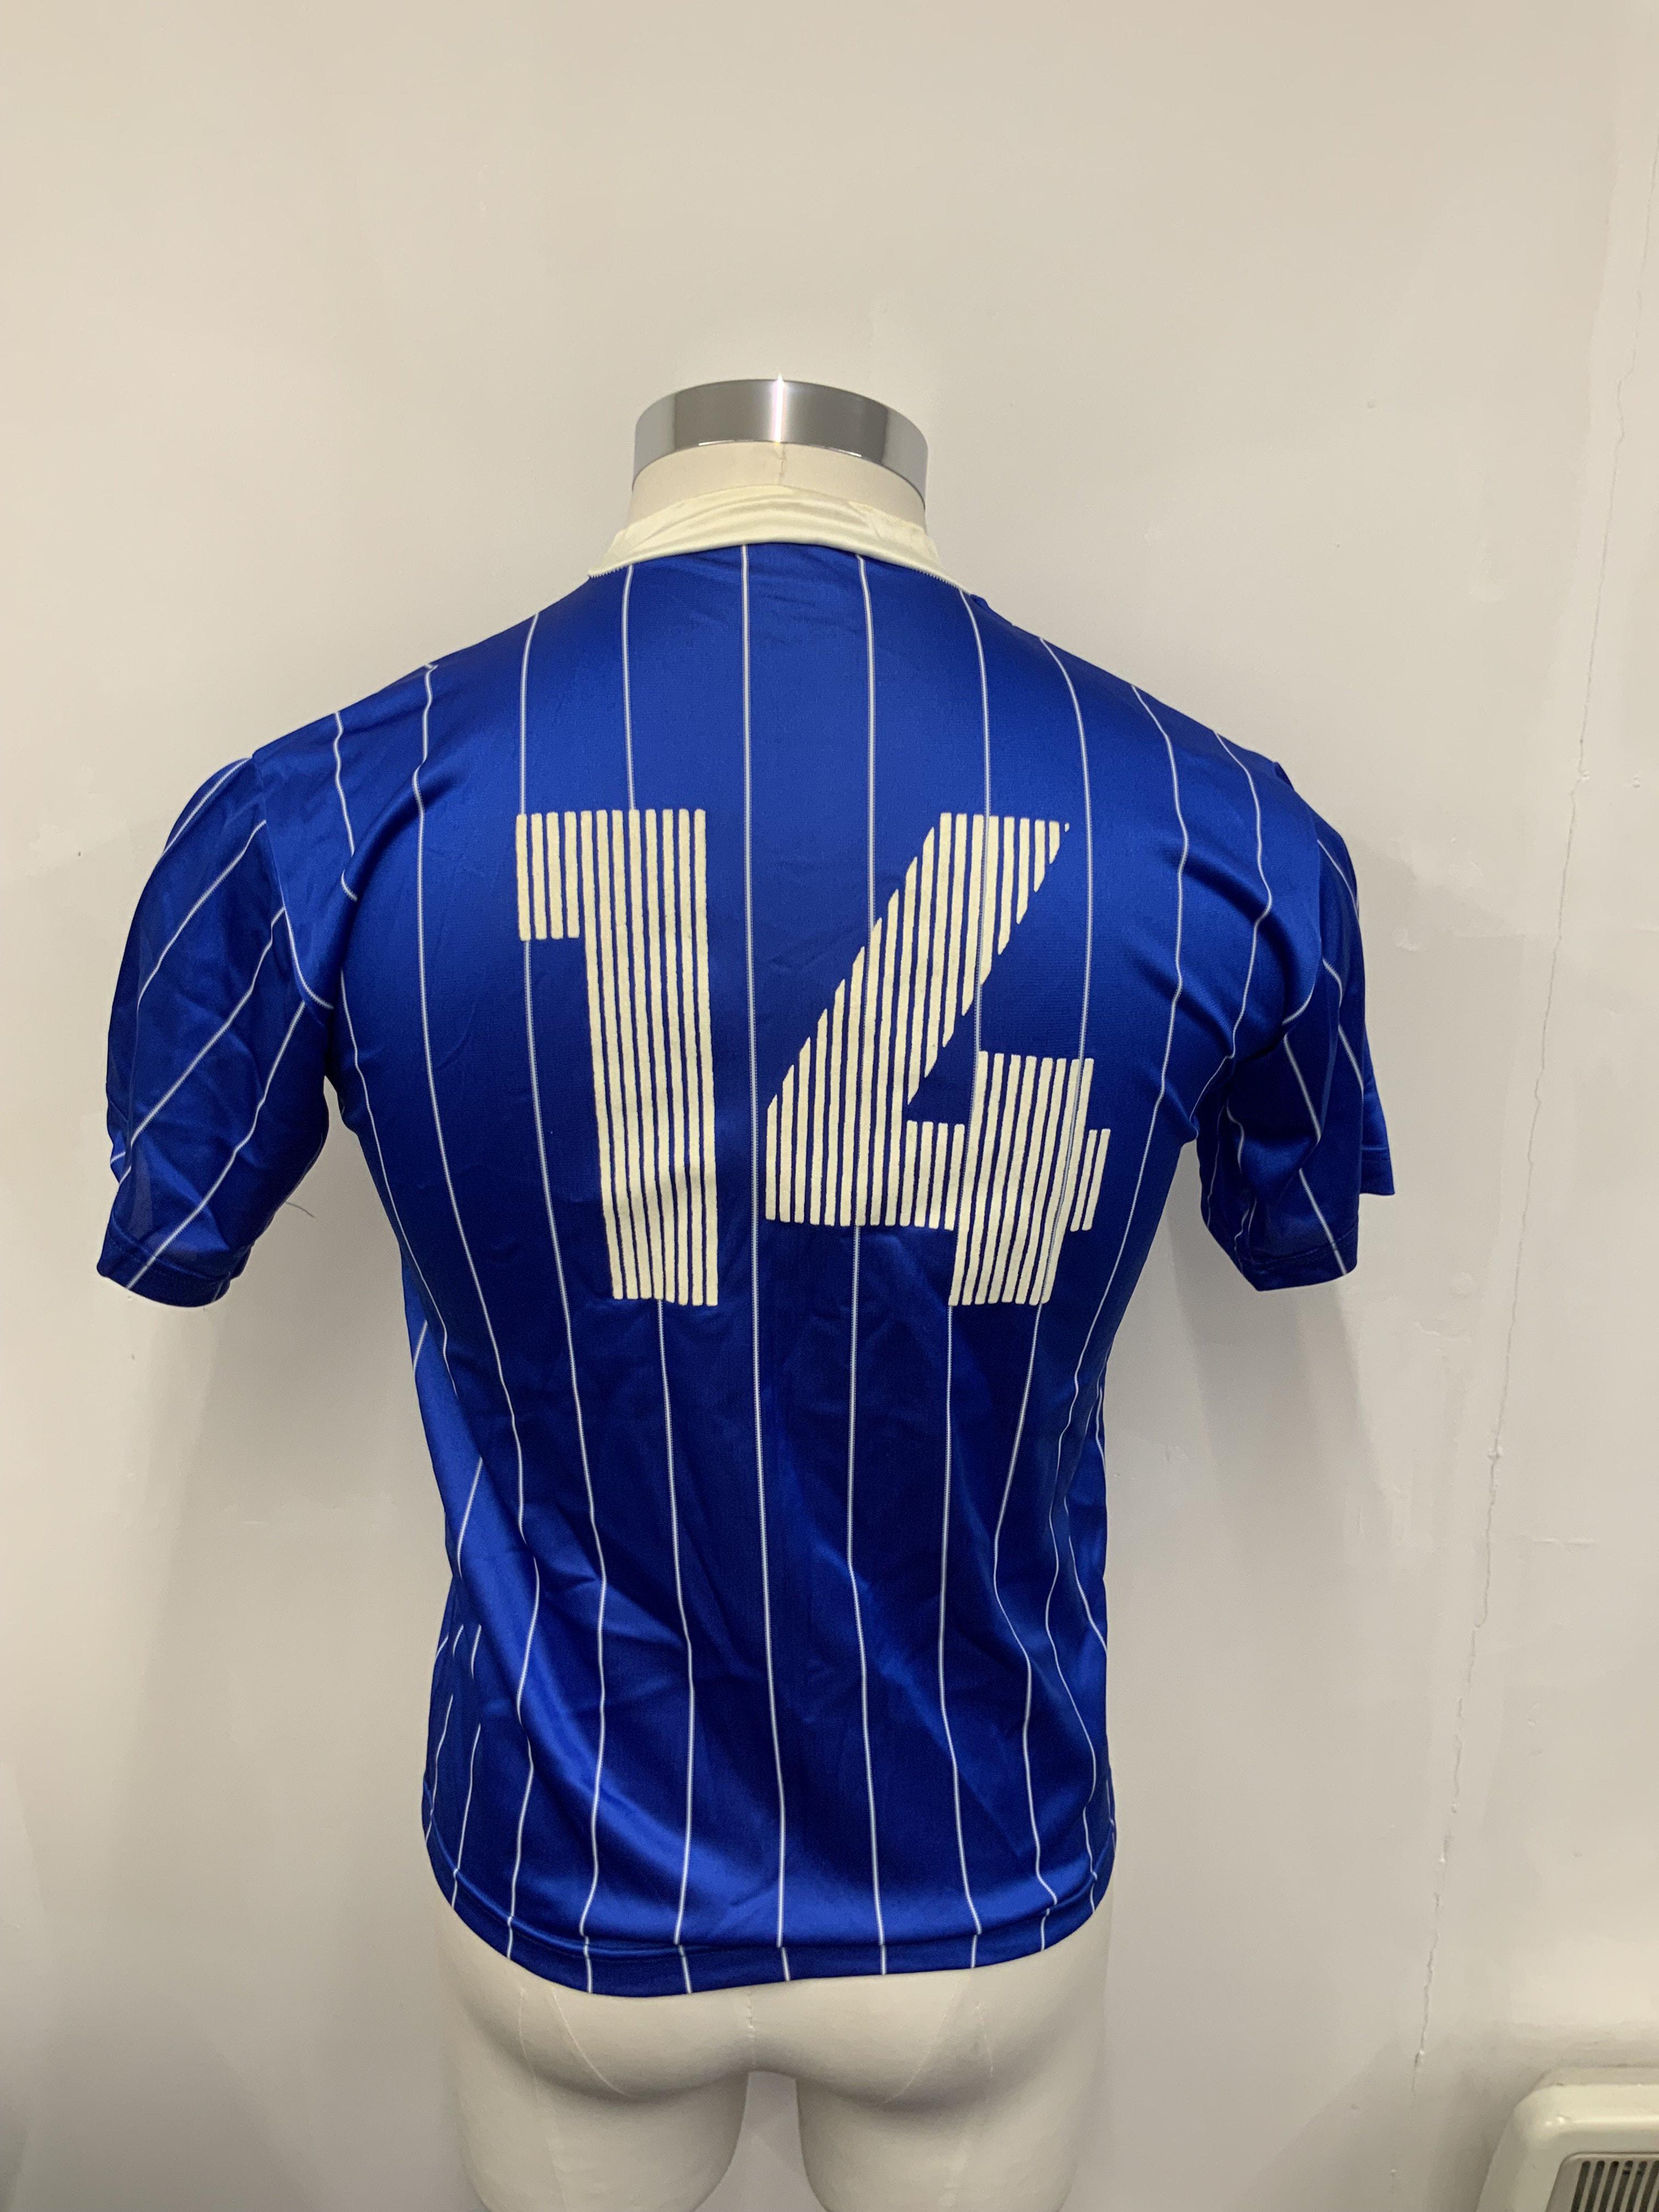 1982 Limassol Match Worn Football Shirt: Blue and - Image 2 of 3